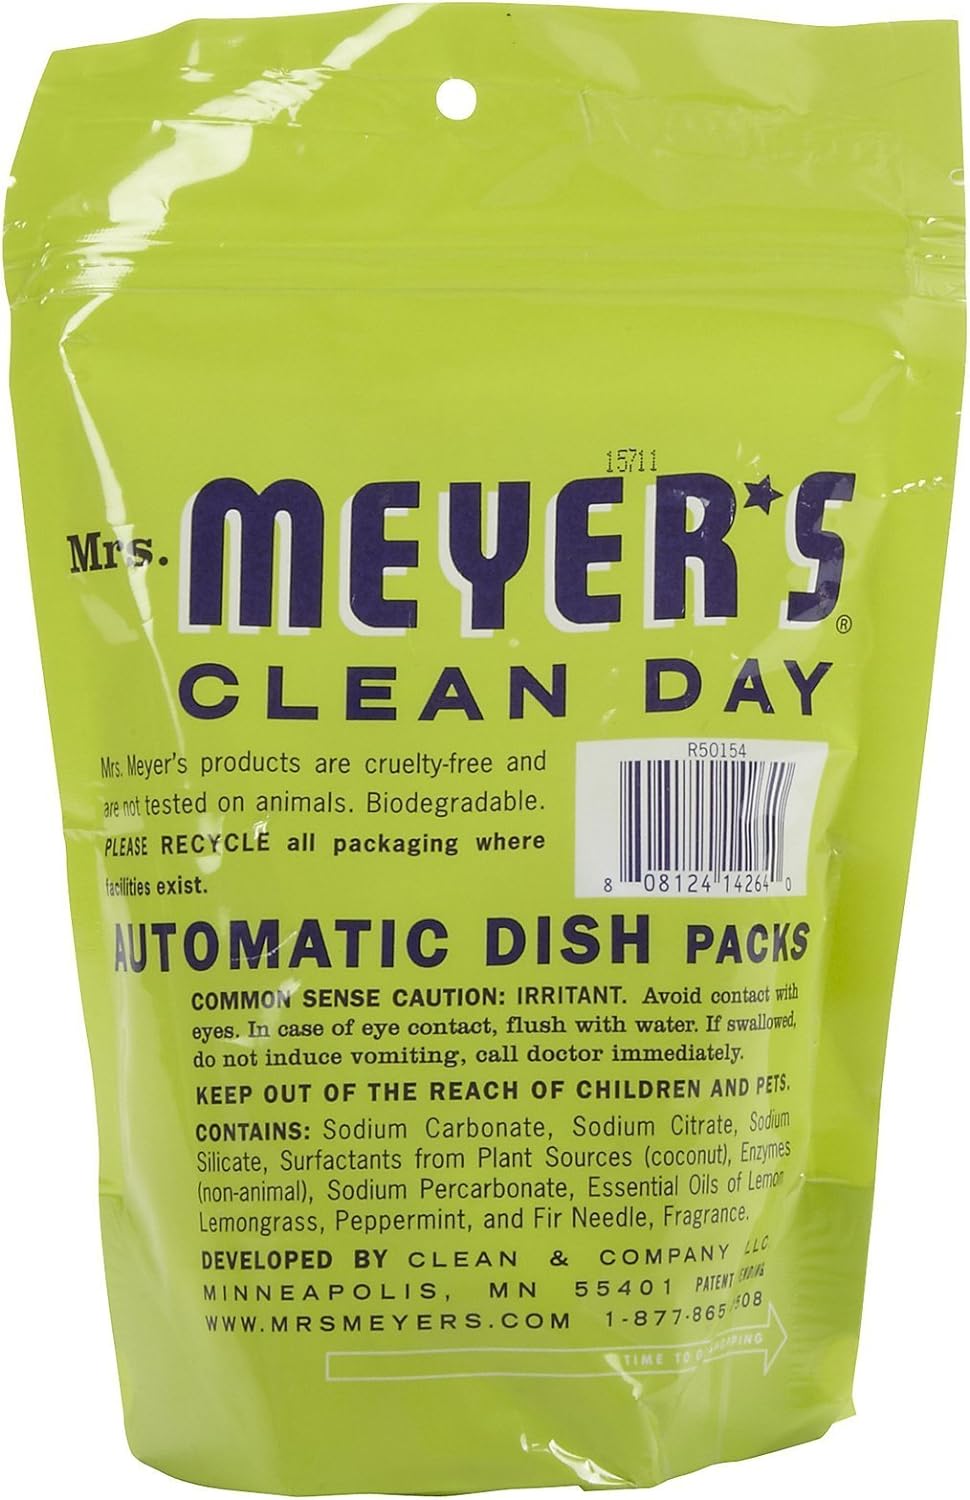 MRS. MEYER’S CLEANDAY, Dishwasher Lemon Verbena, 11.6 Ounce : Health & Household